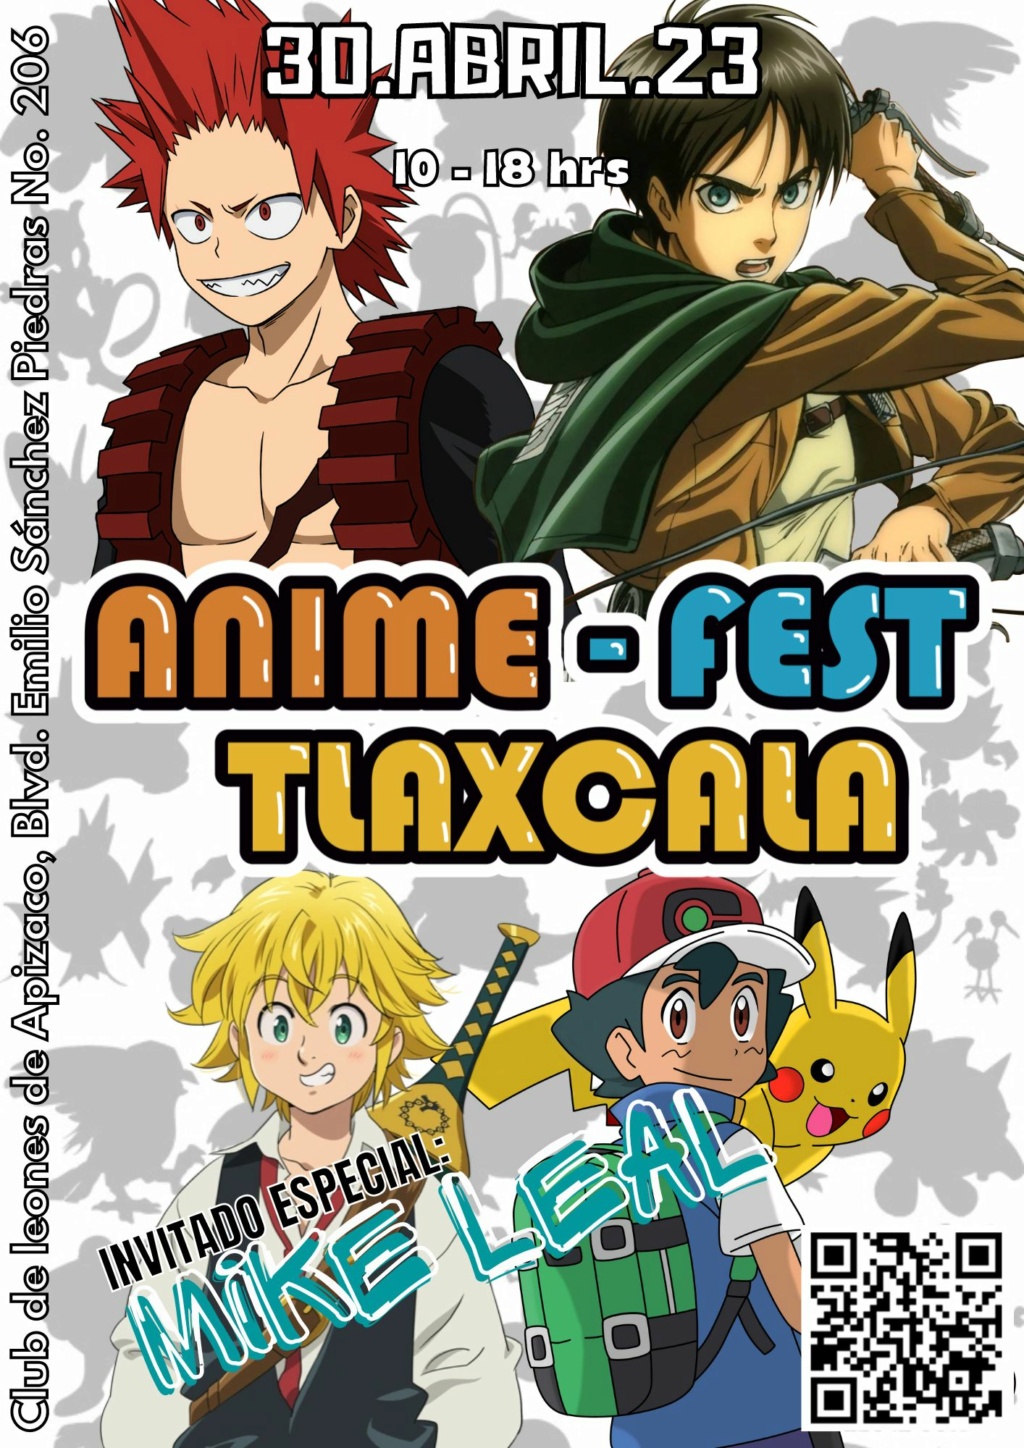 Anime-Fest Tlaxcala 32970610